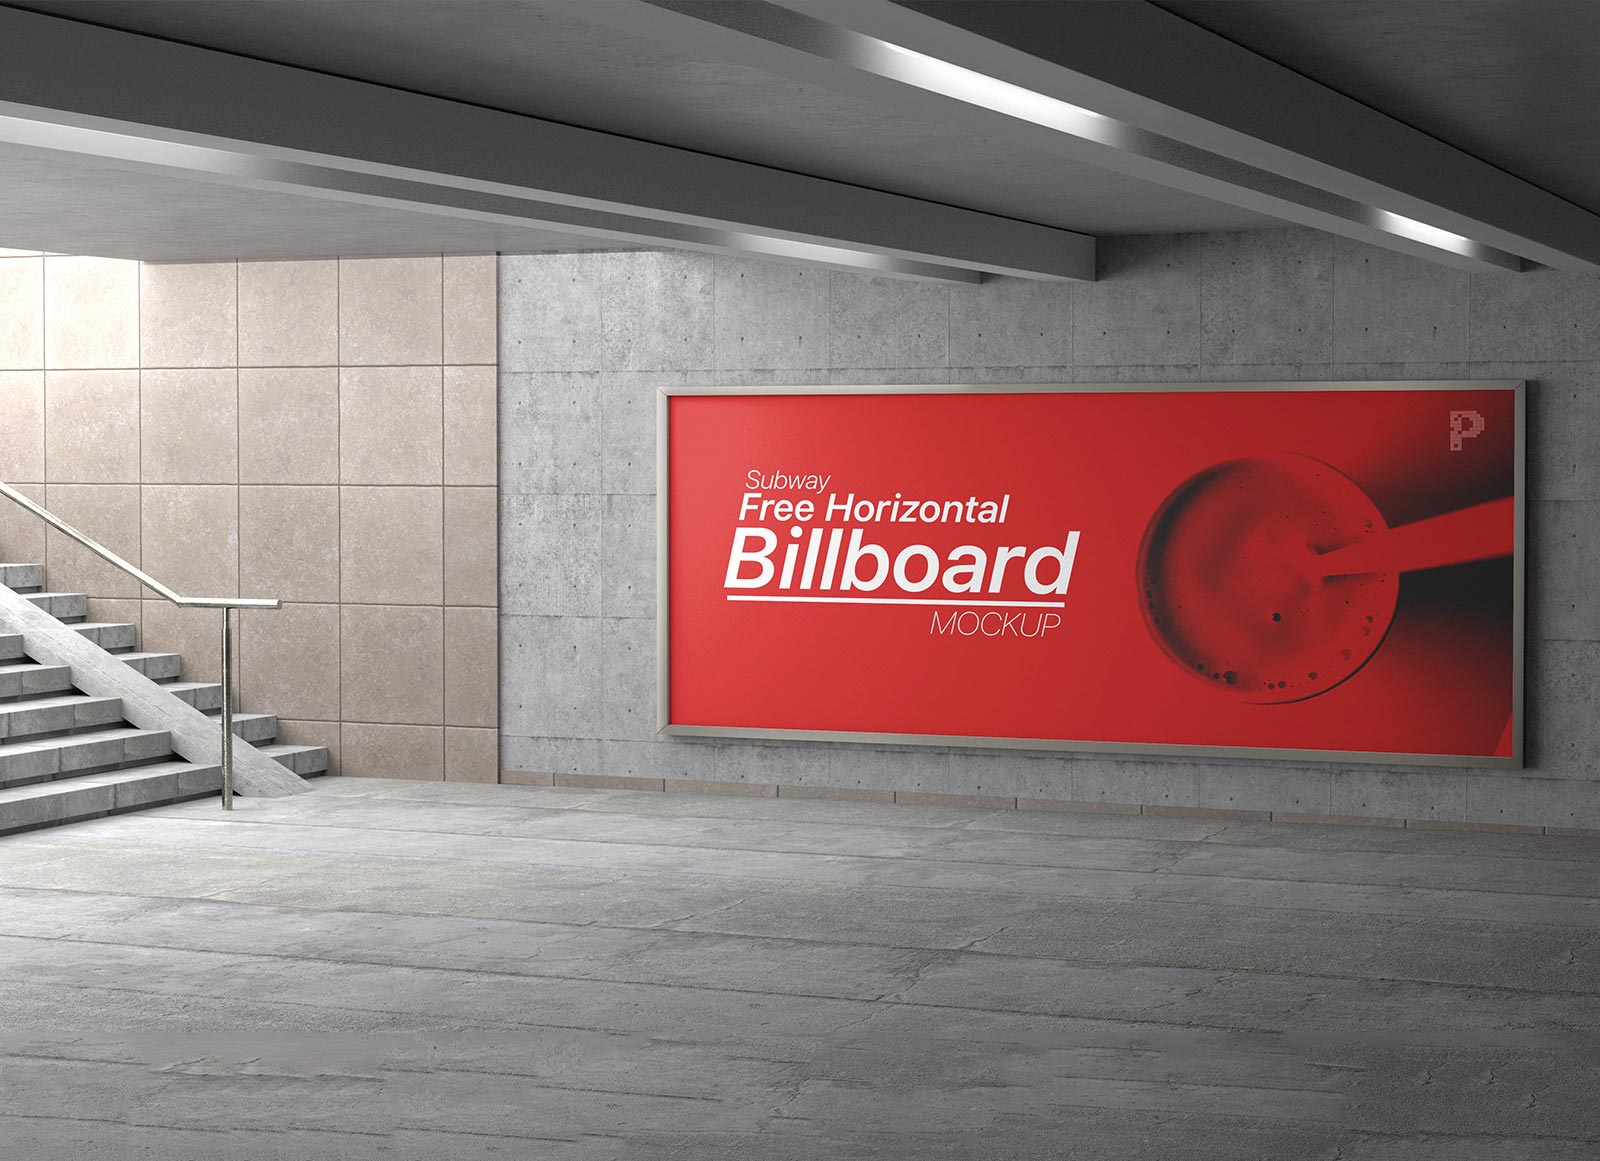 Free-Subway-Horizontal-Billboard-Mockup-PSD